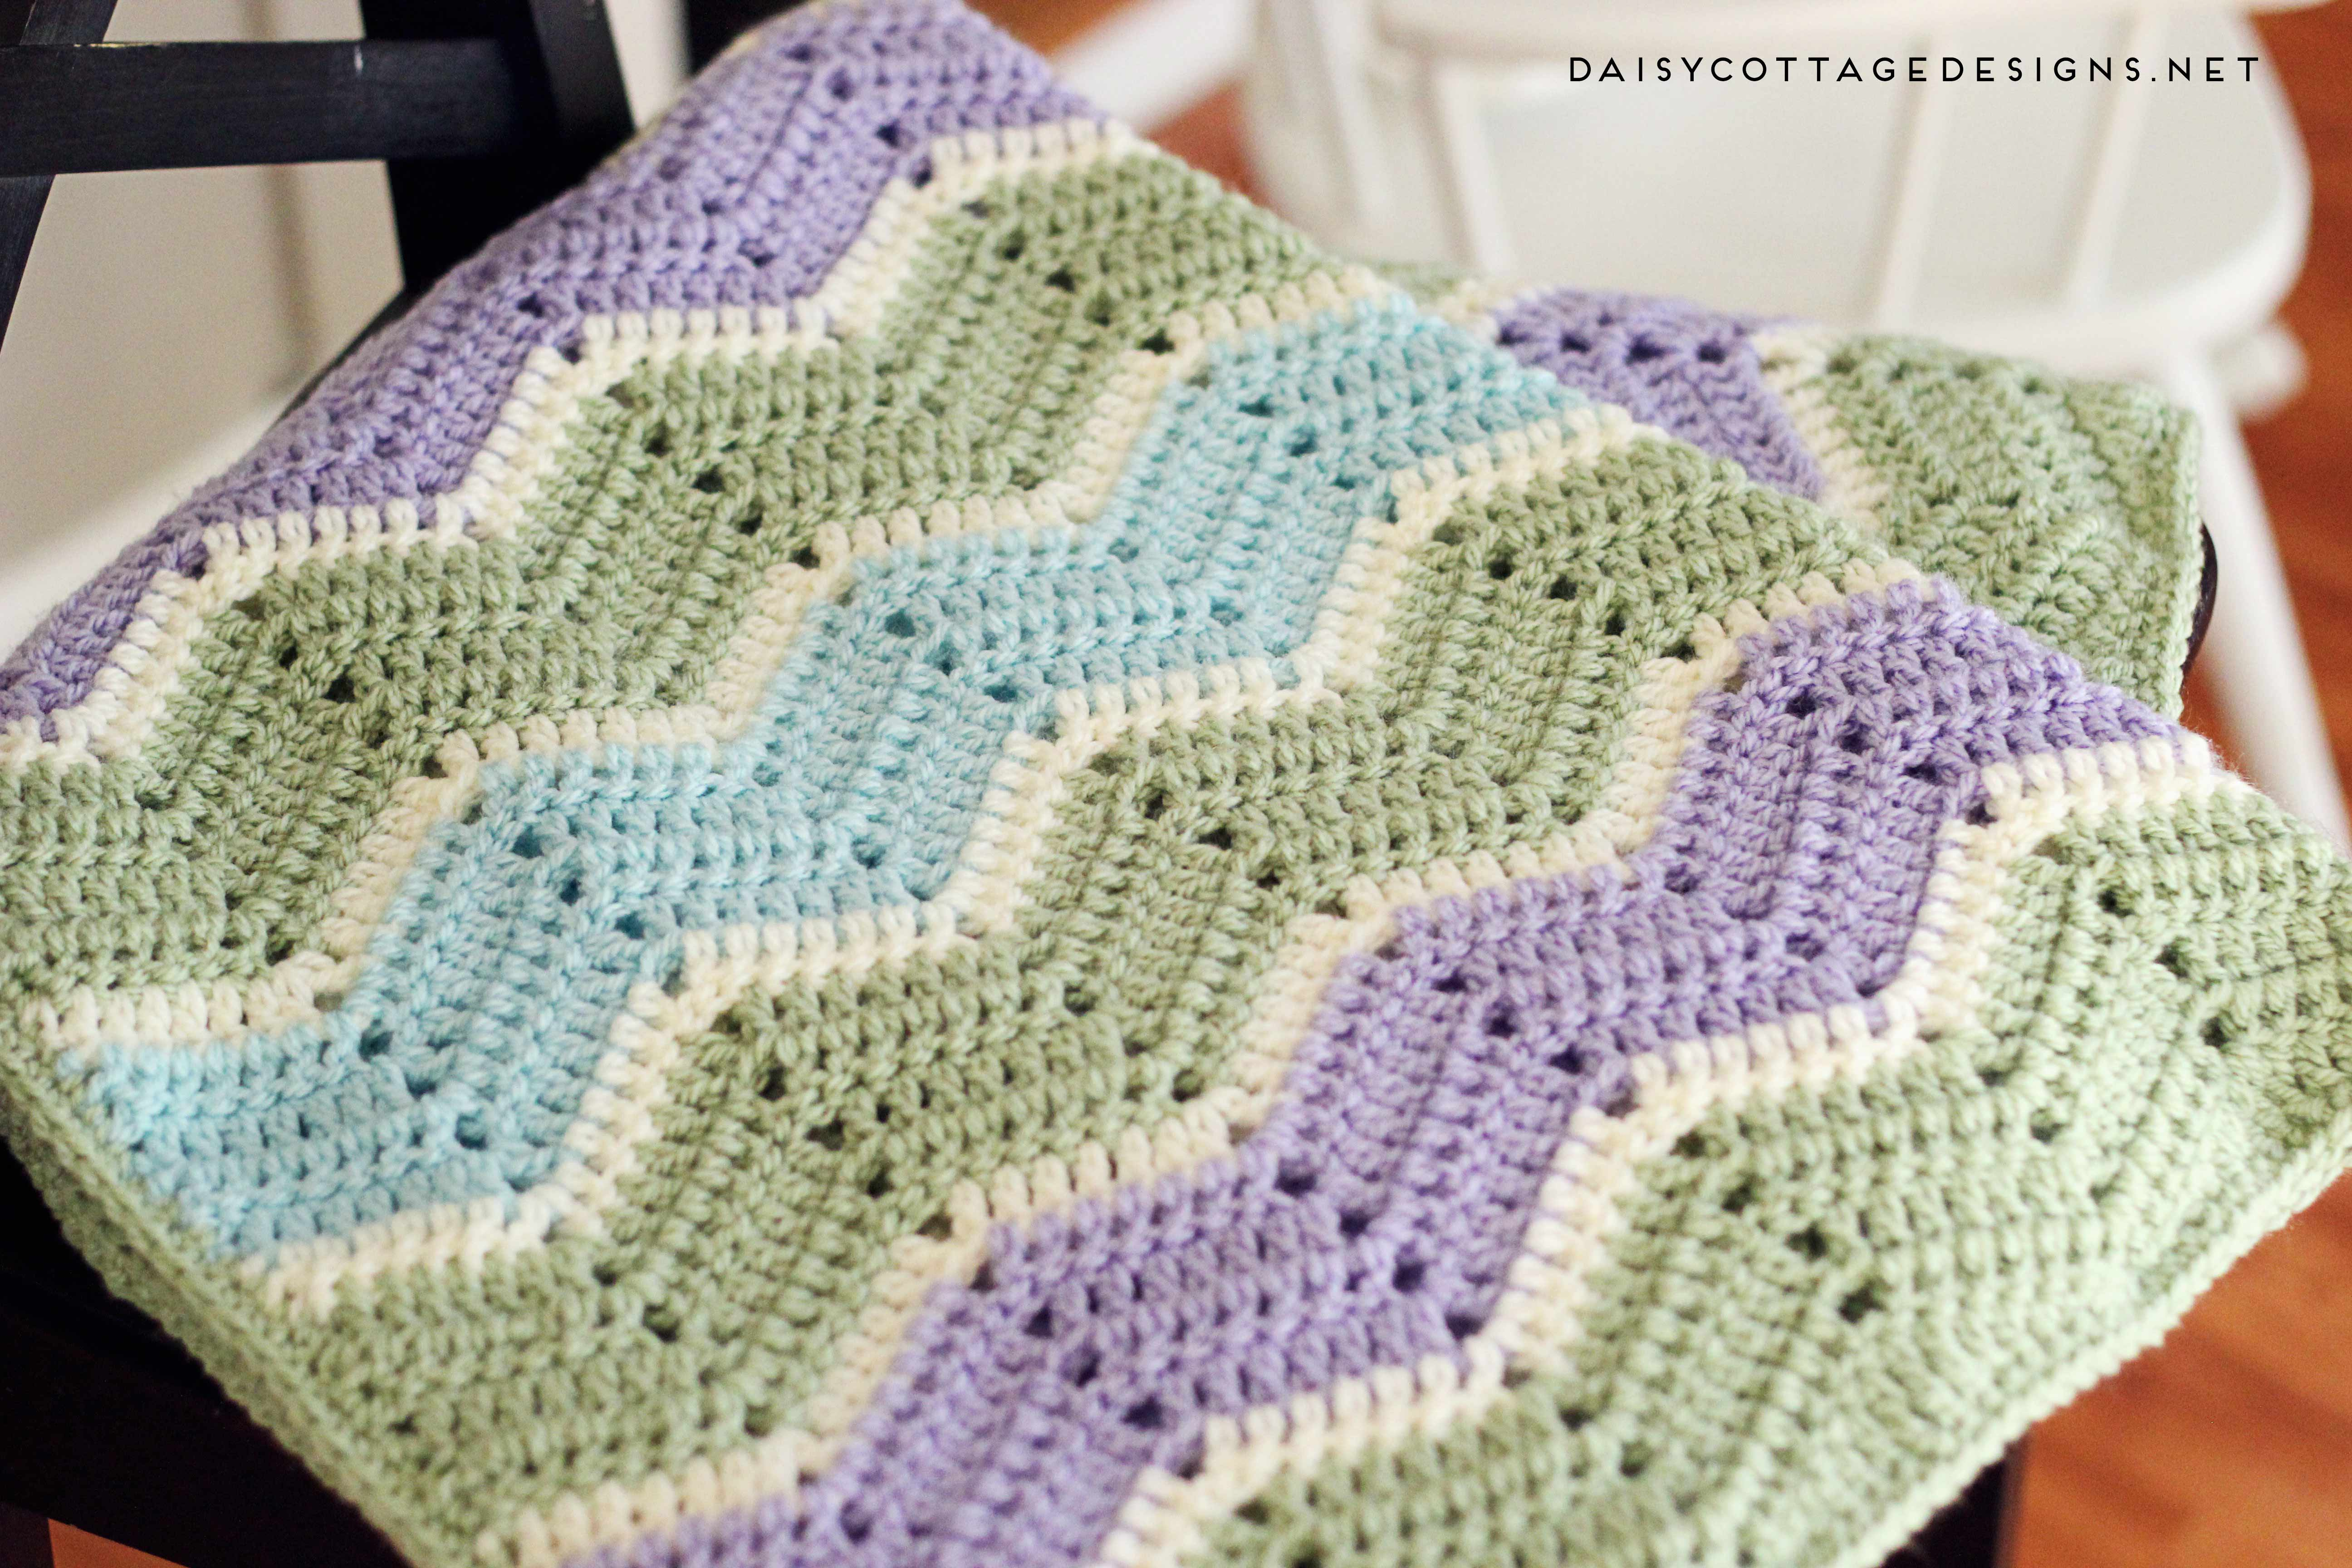 Crochet Patterns For Baby Easy Chevron Blanket Crochet Pattern Daisy Cottage Designs